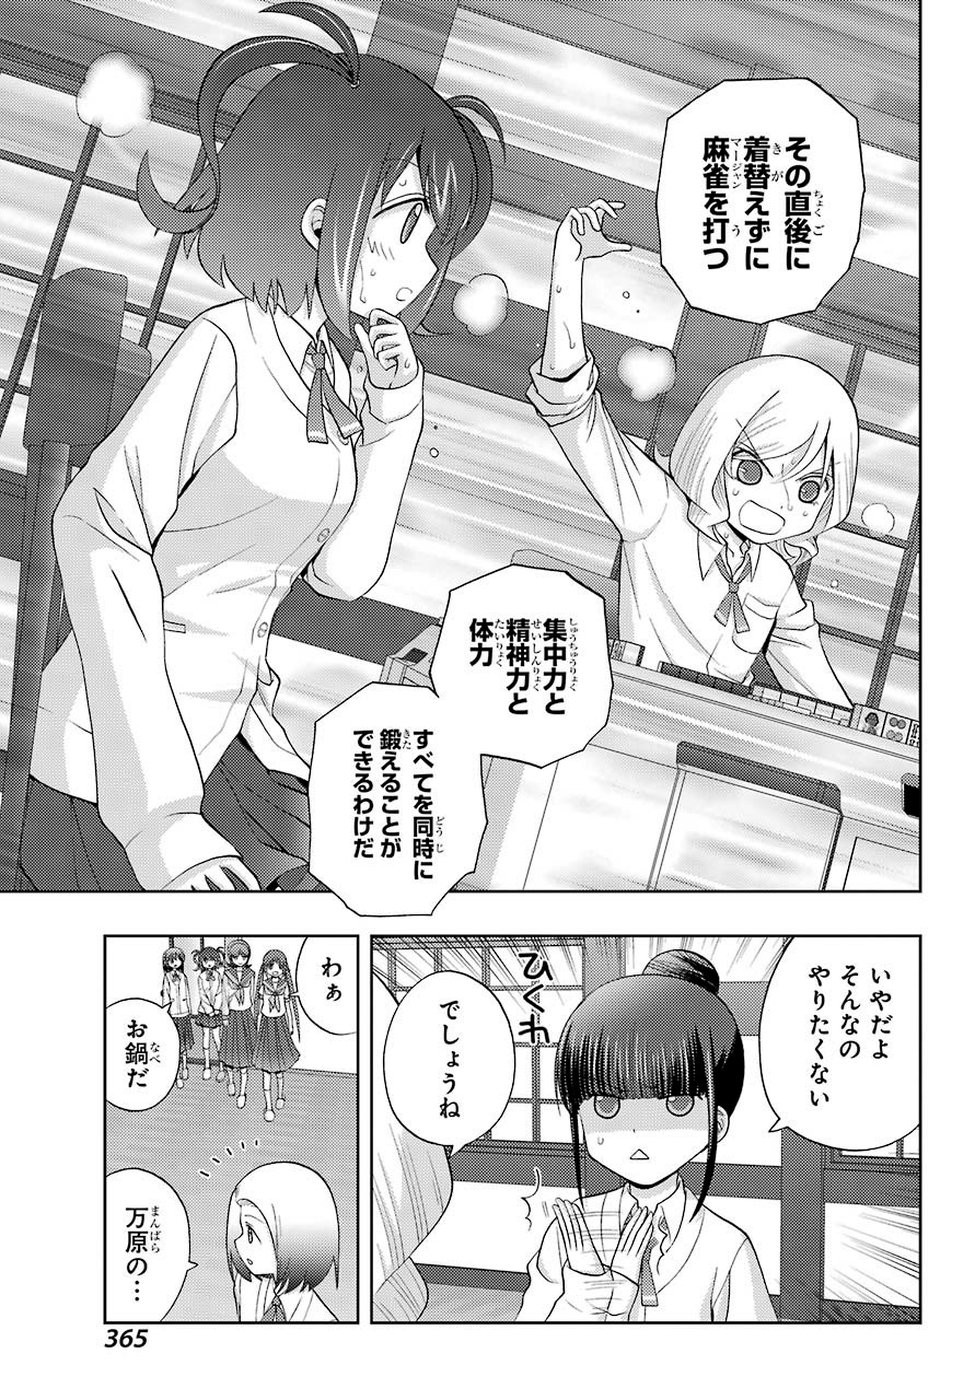 Shinohayu - The Dawn of Age Manga - Chapter 074 - Page 3